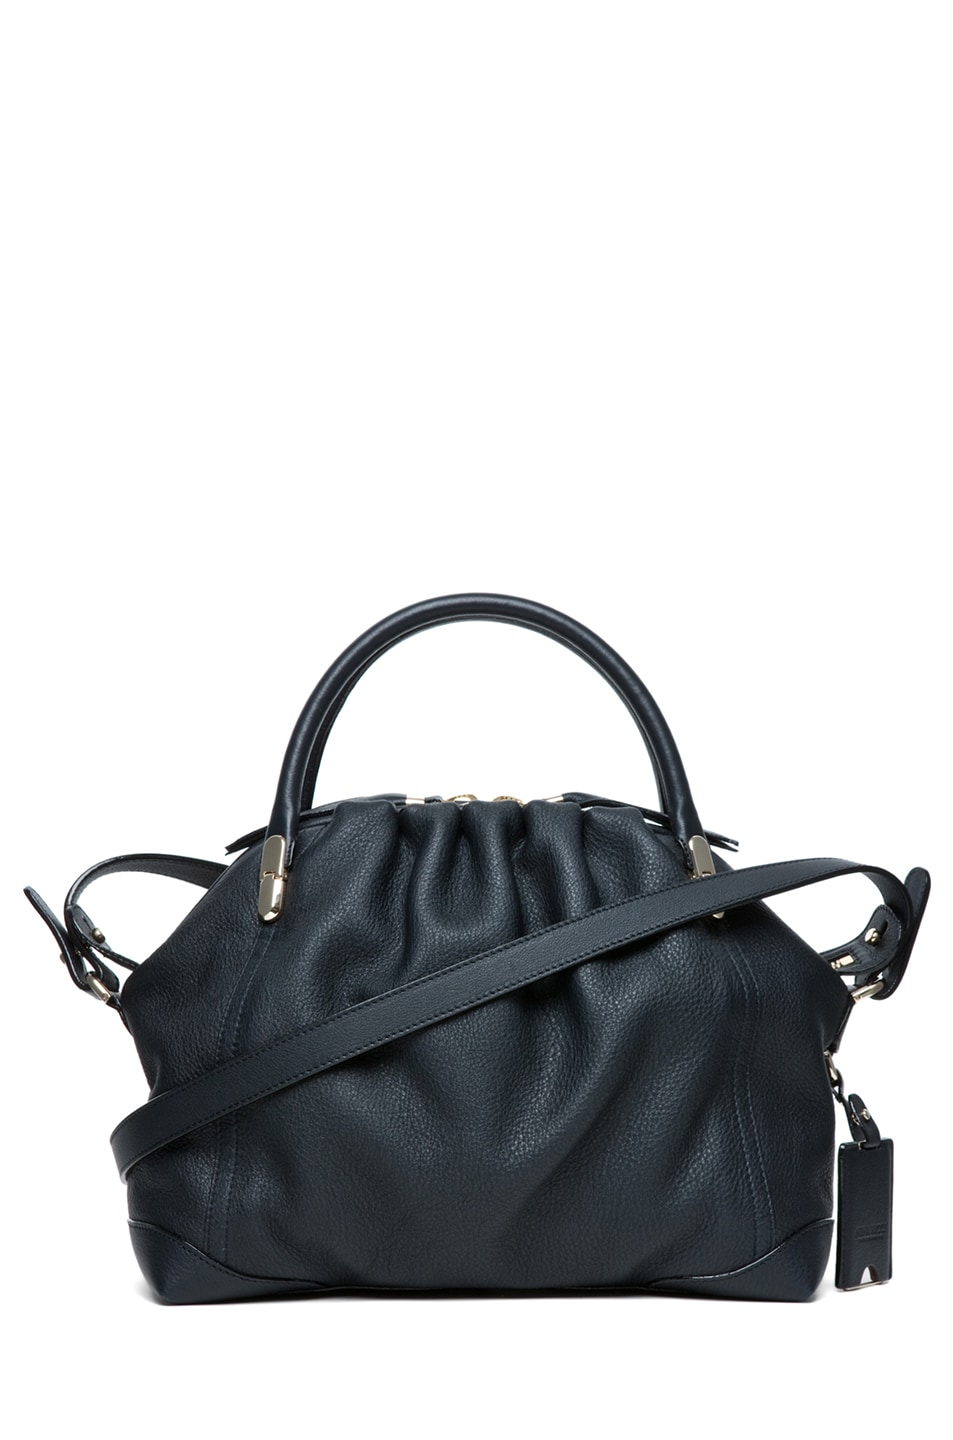 Nina Ricci Small Bag in Noir | FWRD